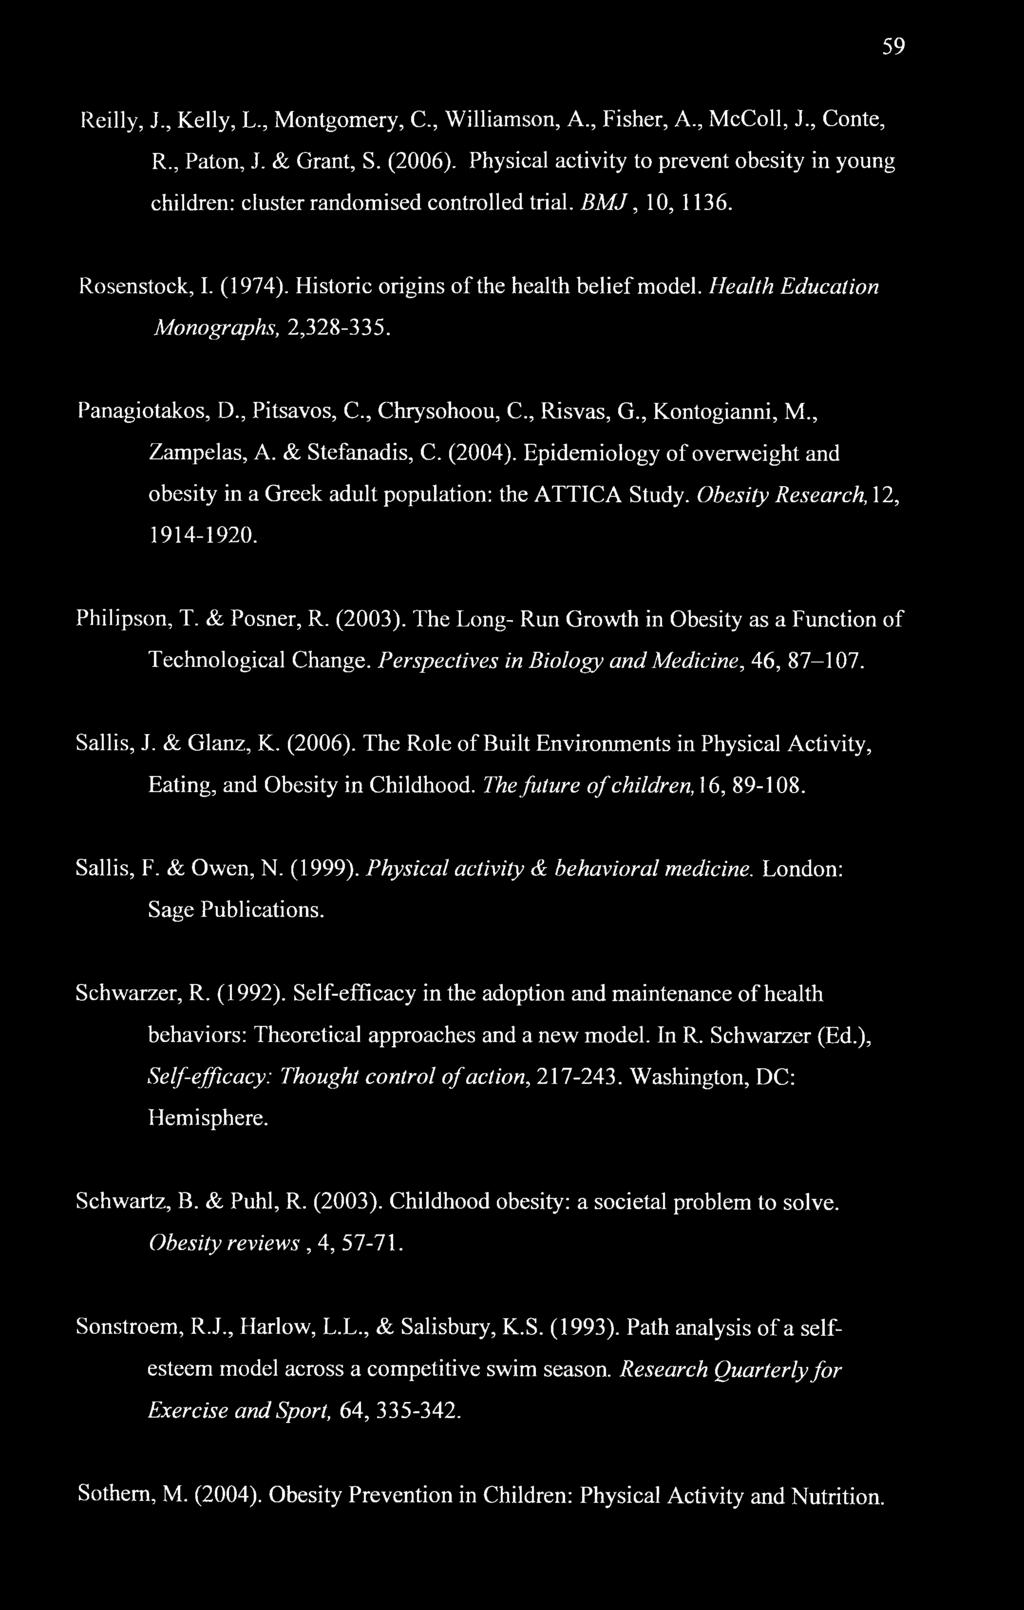 Health Education Monographs, 2,328-335. Panagiotakos, D., Pitsavos, C., Chrysohoou, C., Risvas, G., Kontogianni, M., Zampelas, A. & Stefanadis, C. (2004).